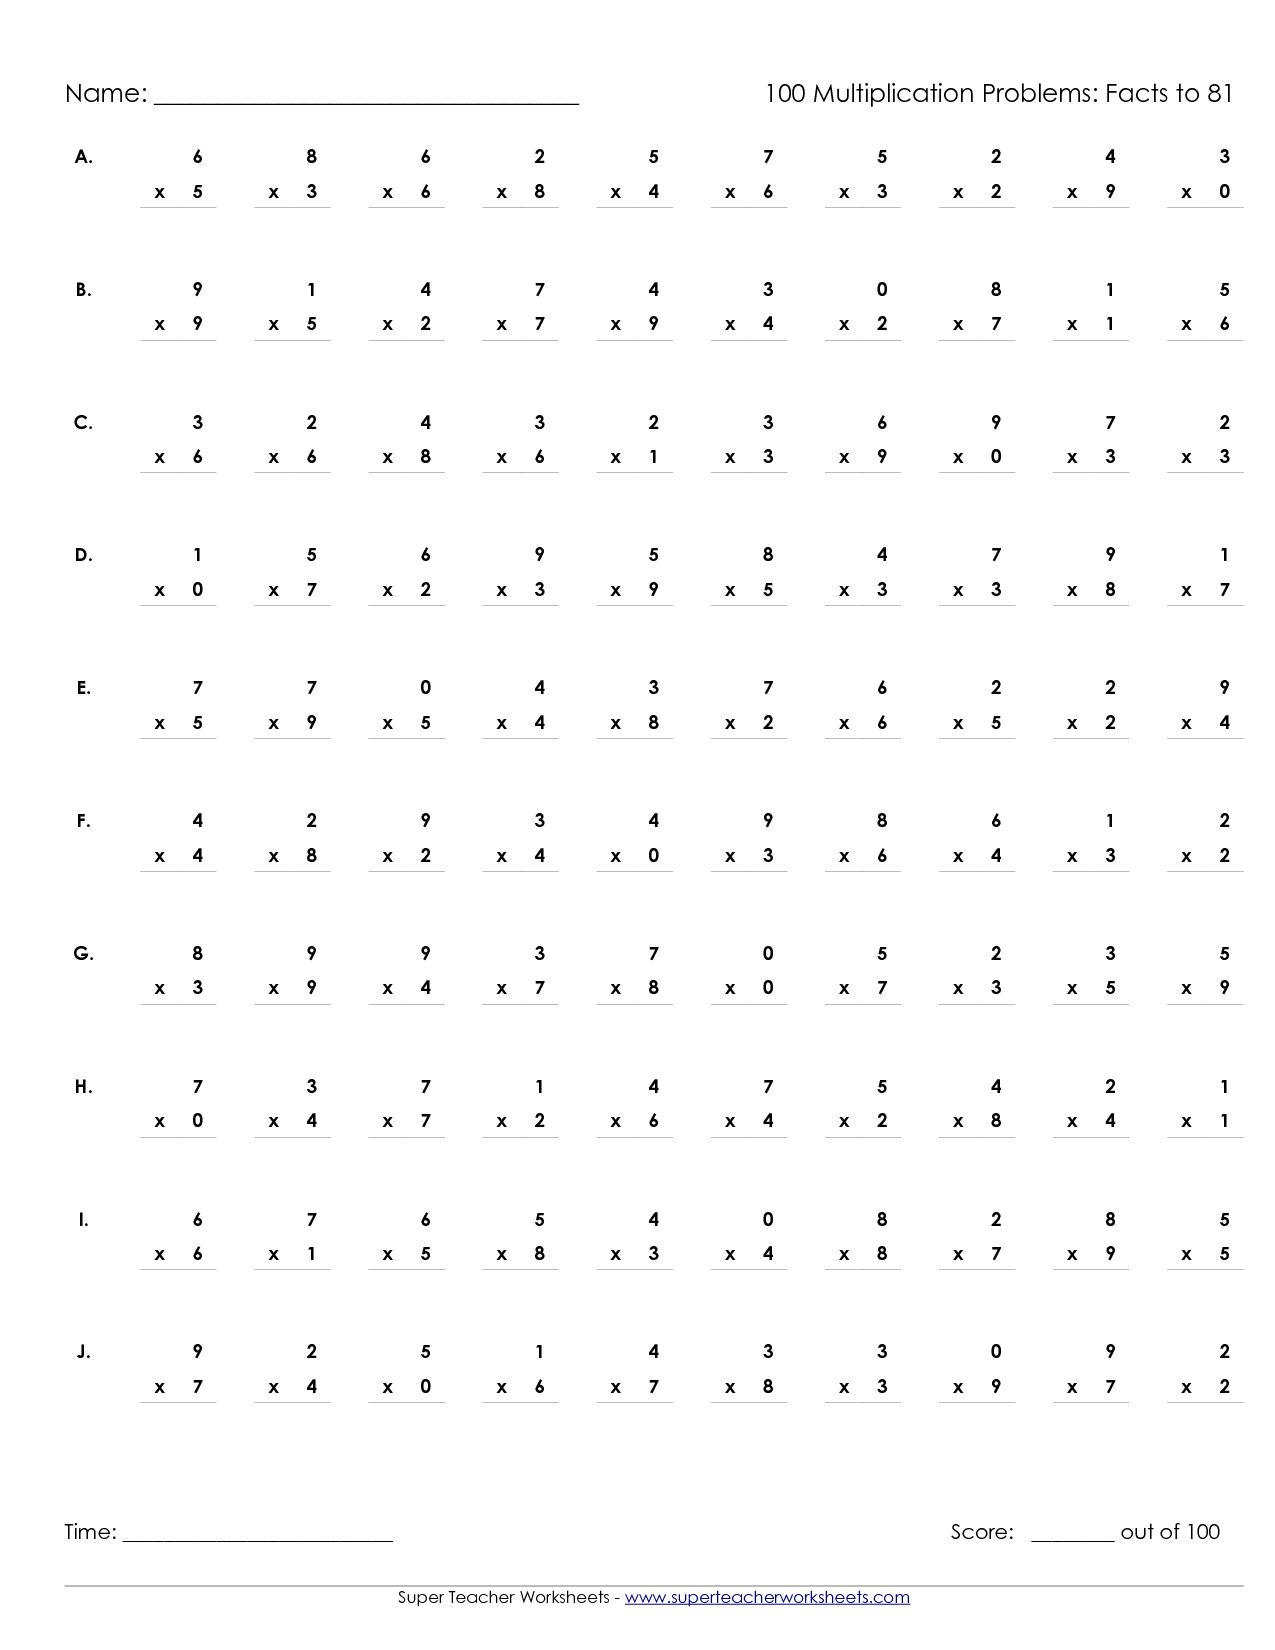 Printable Multiplication Worksheets 100 Problems throughout Printable Multiplication Sheets 100 Problems